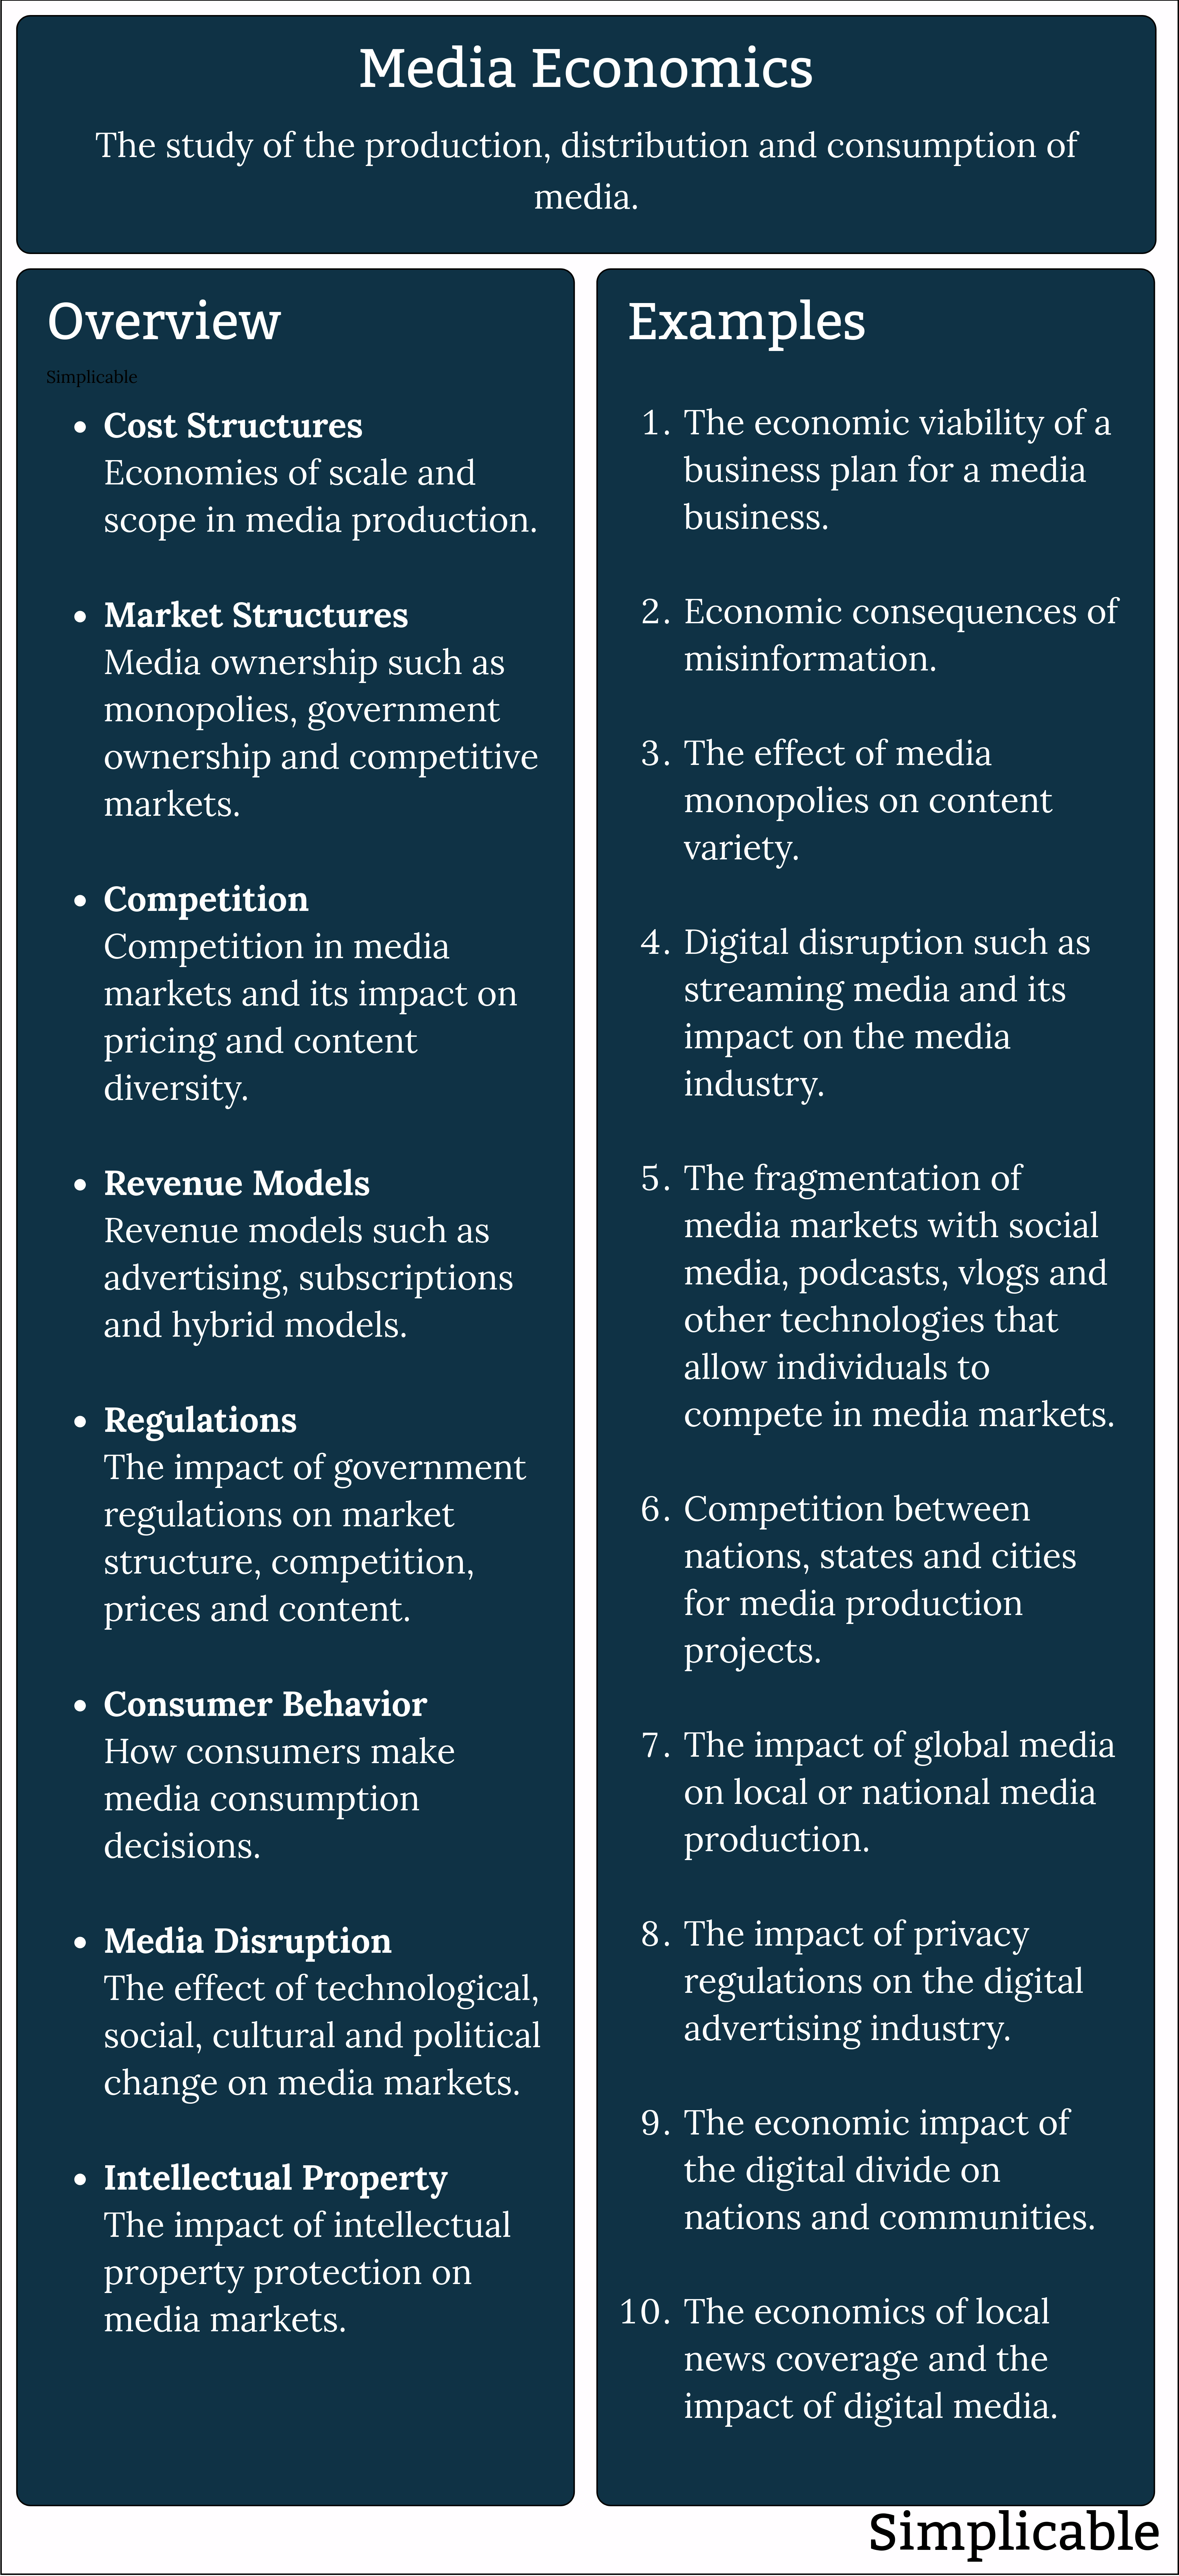 media economics overview and examples